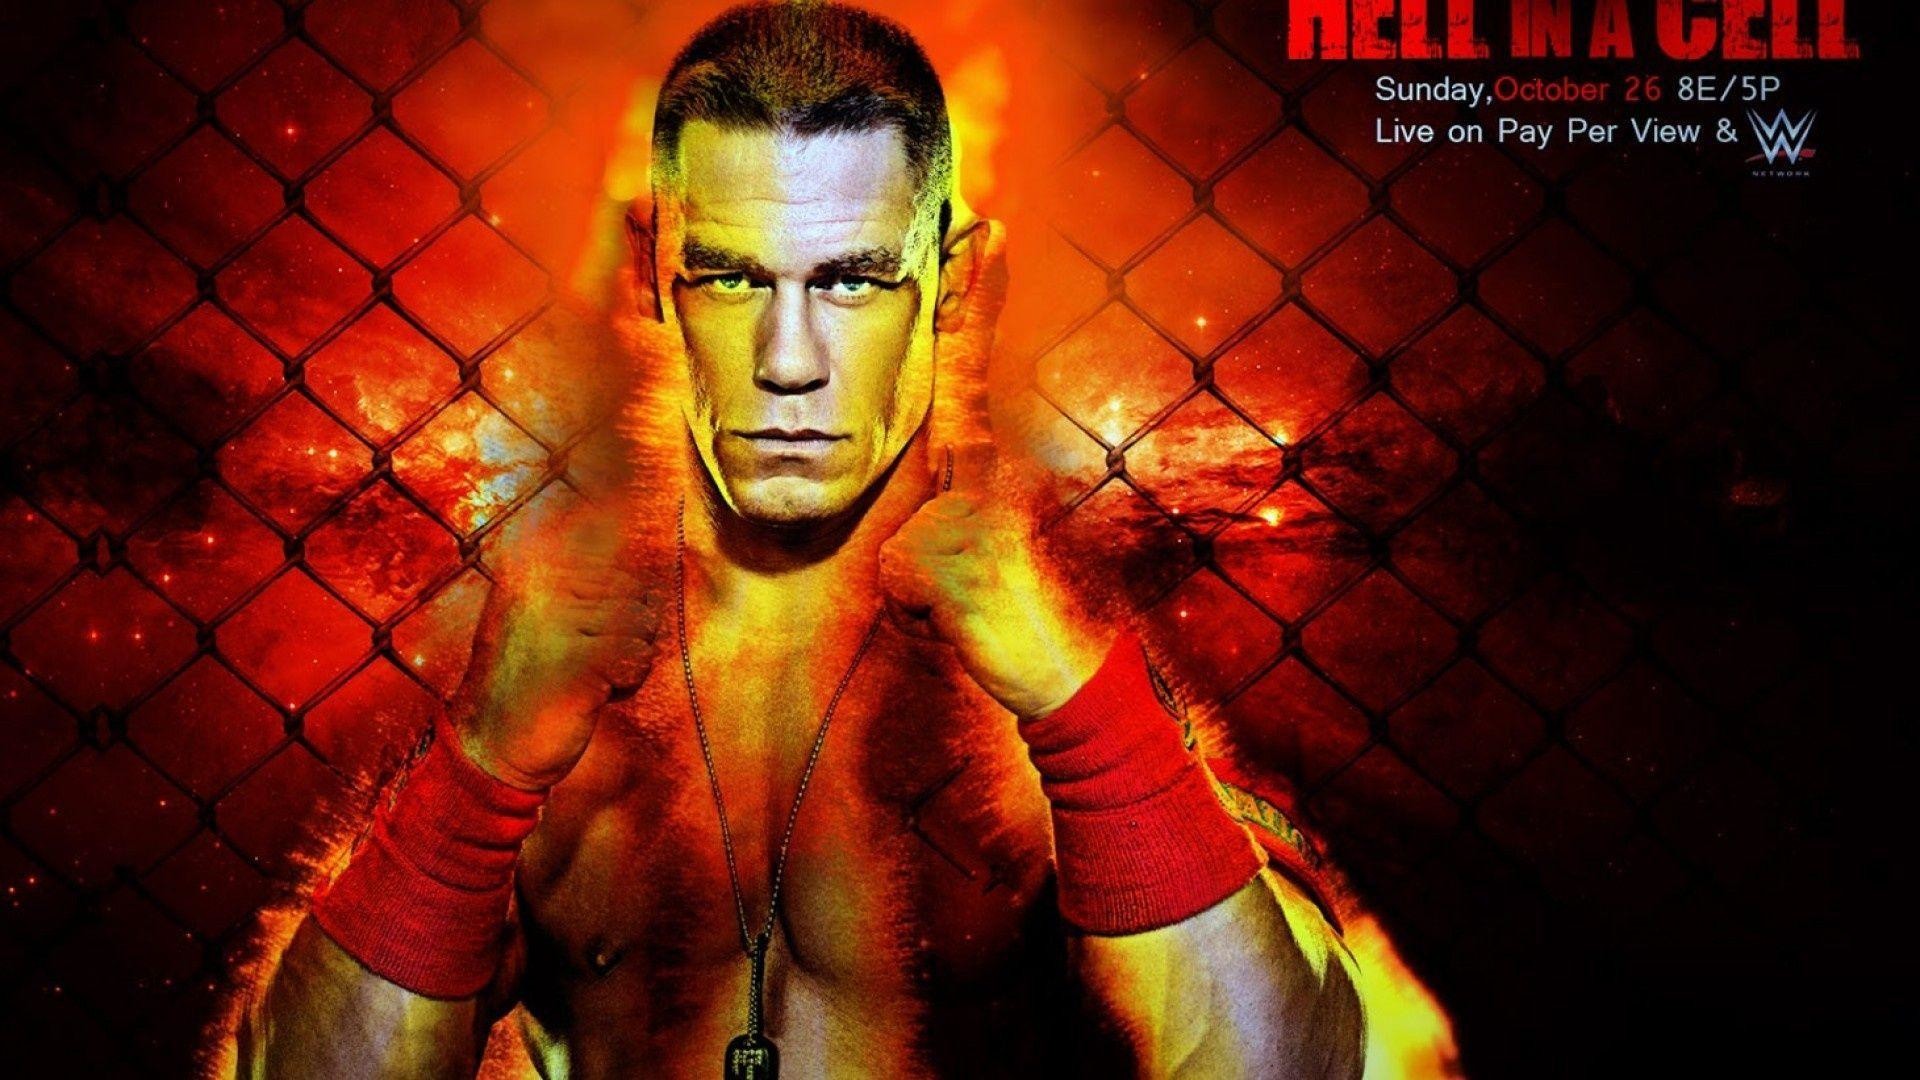 1920x1080  2014, Wwe, Wwf, Wrestling, John Cena, Hell In A Cell